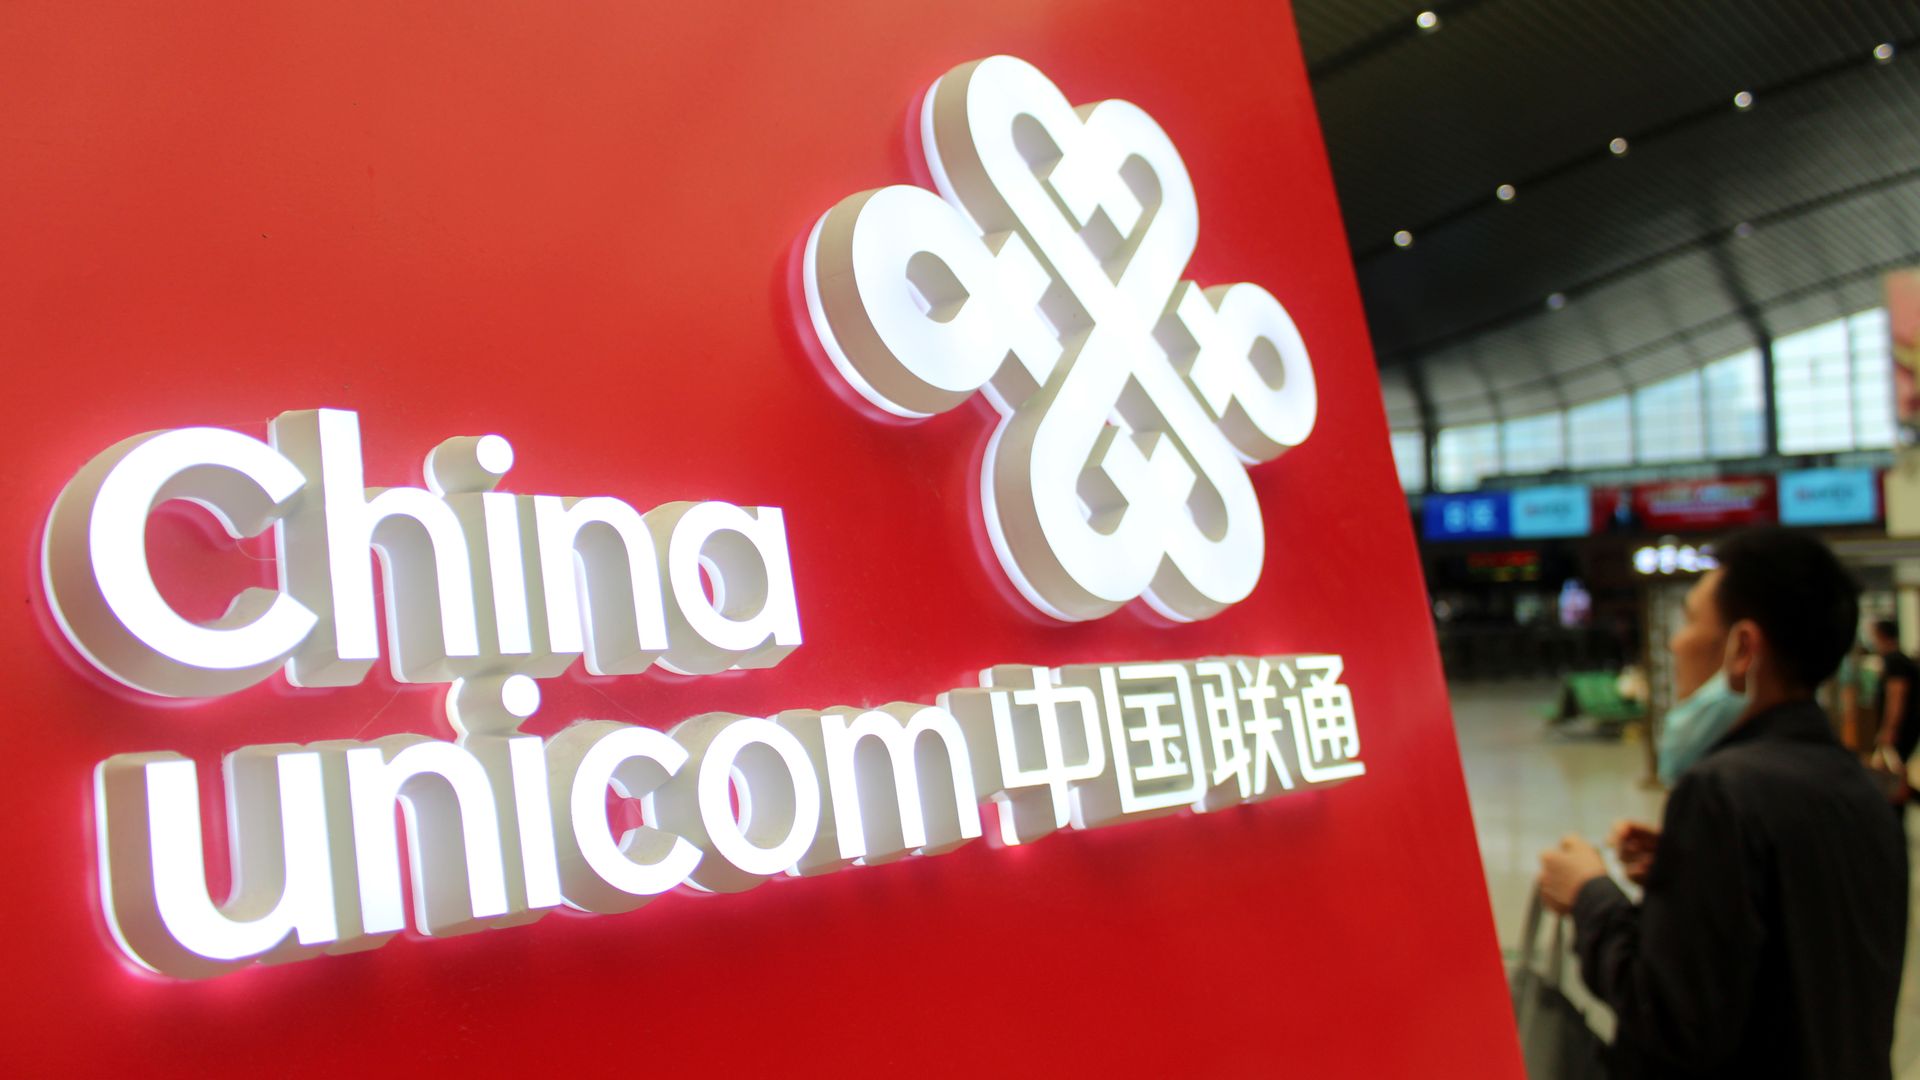 A photo of China Unicom's logo